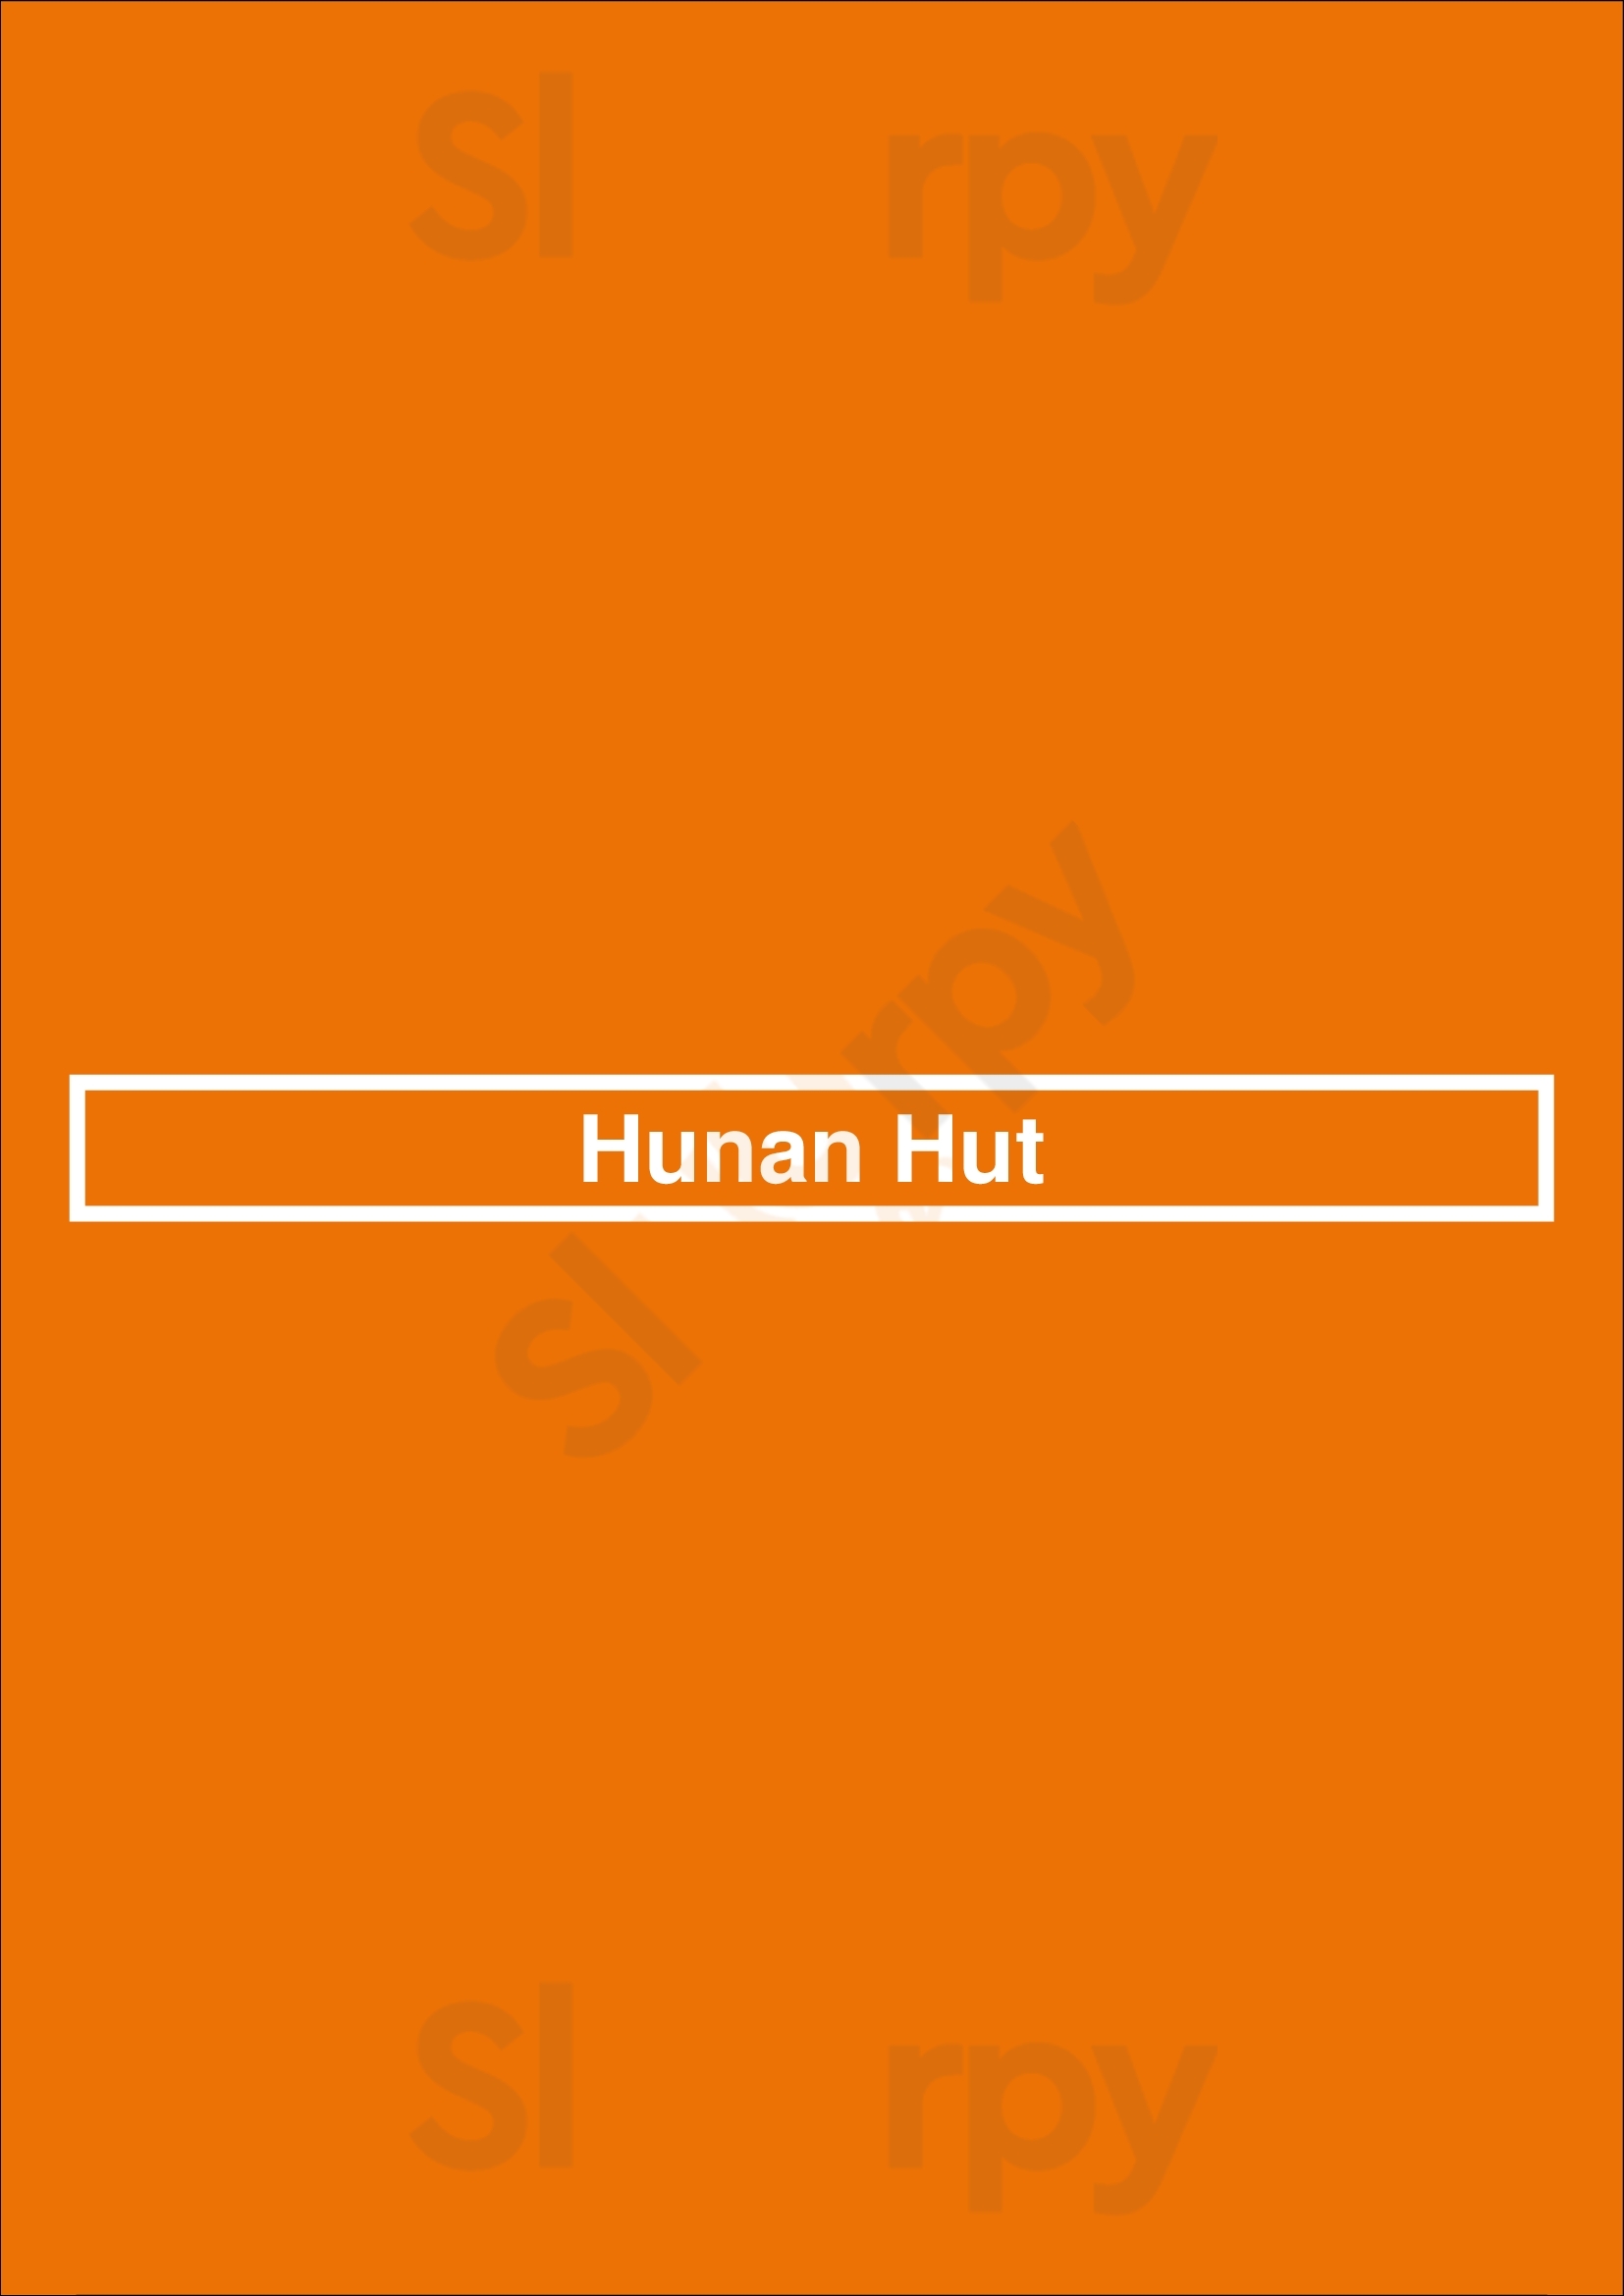 Hunan Hut Houston Menu - 1